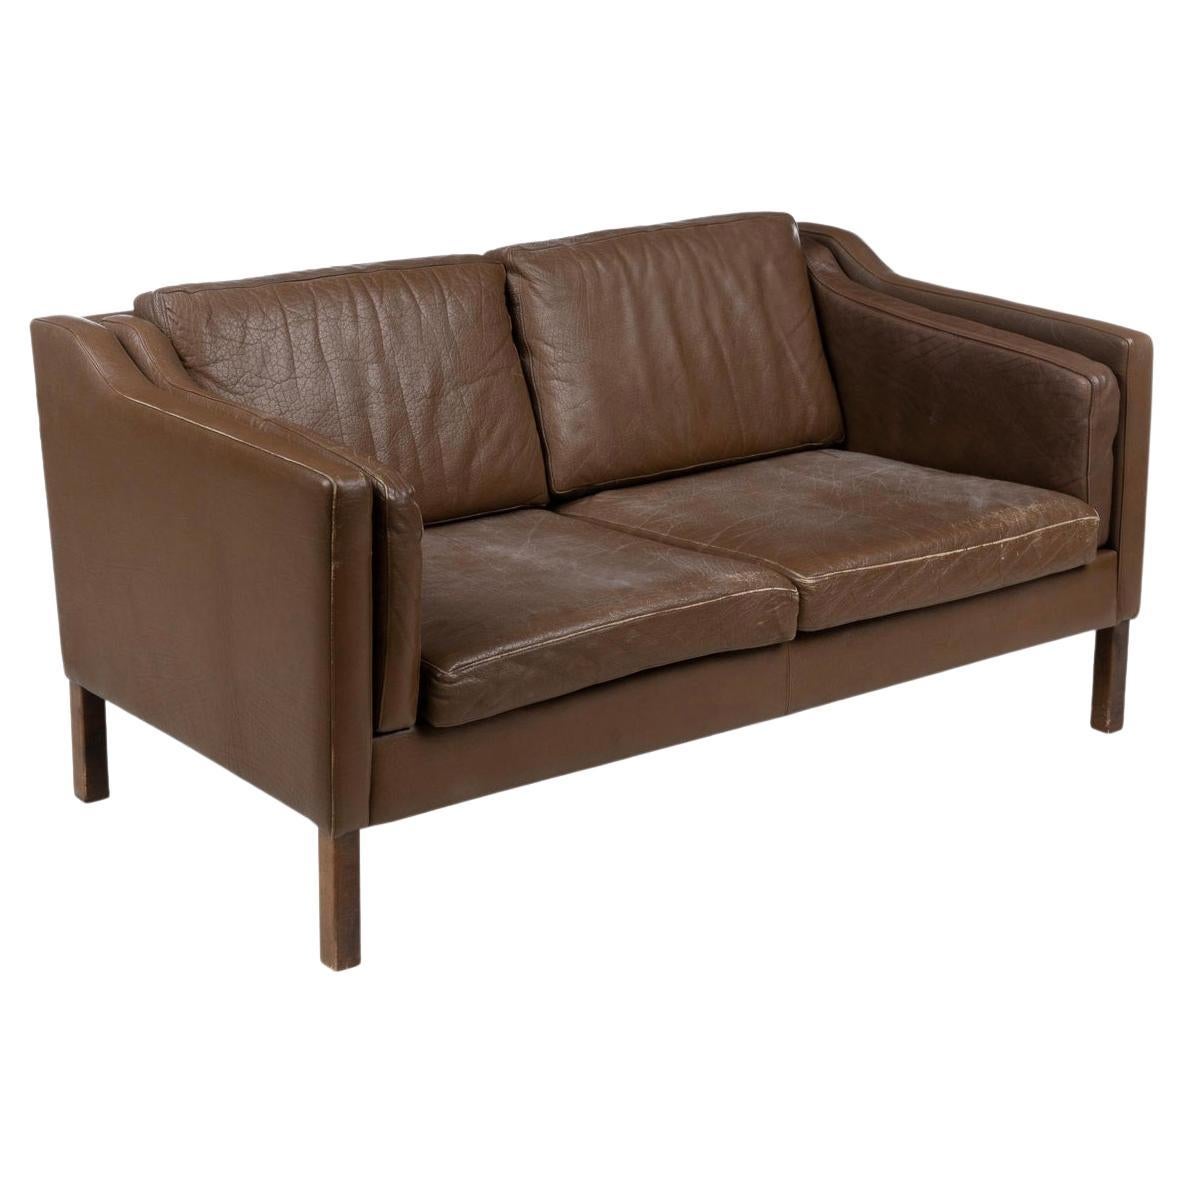 Mid Century Danish Modern Beautiful Brown Leather 2 Seat Sofa wood Legs